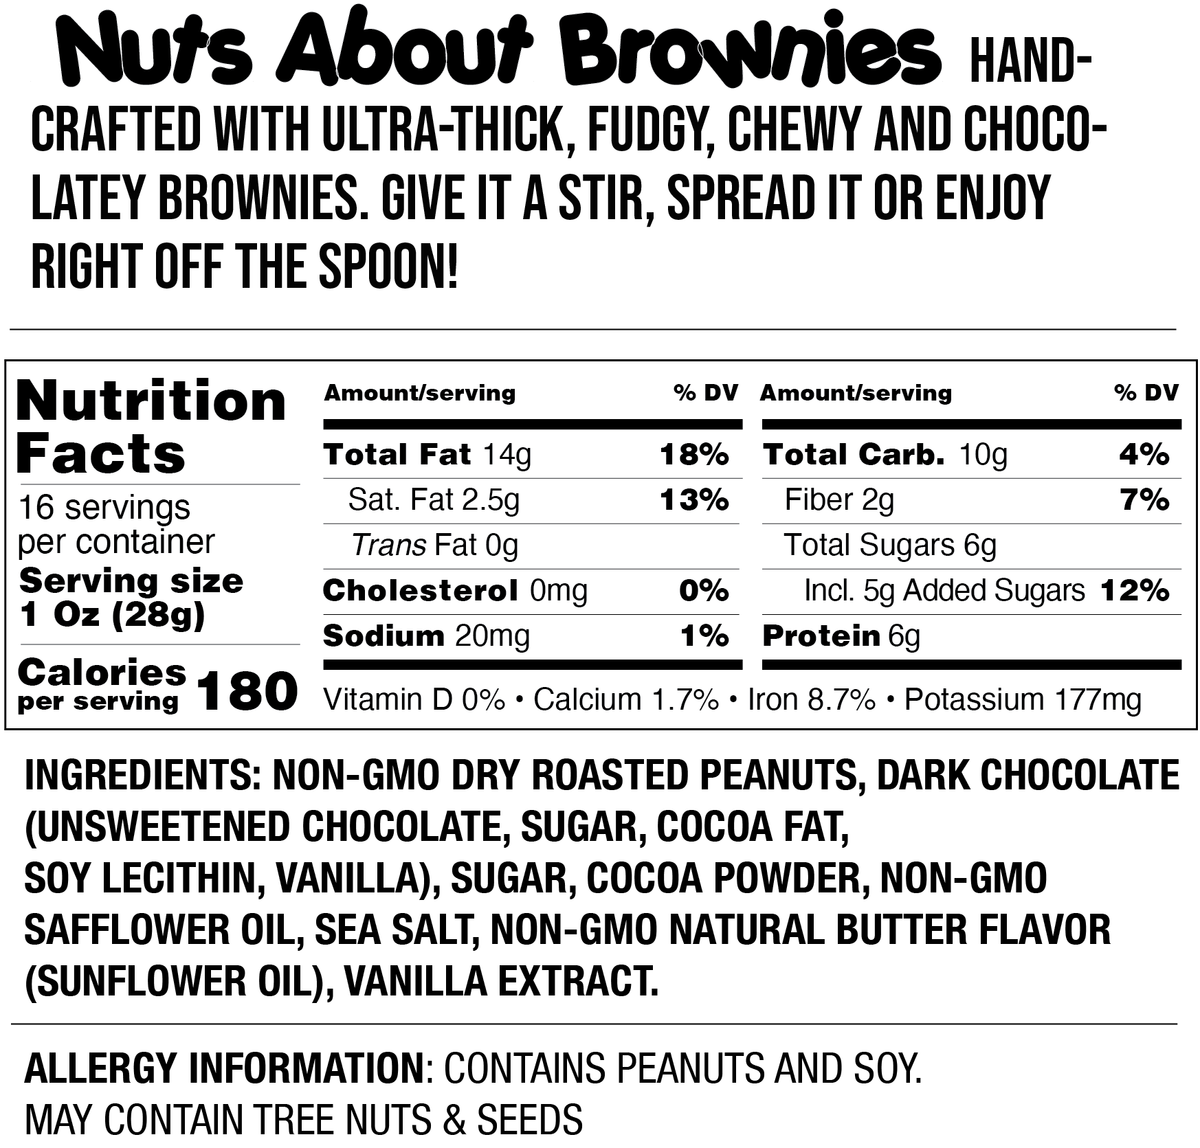 Nuts About Brownies - Fokken Nuts